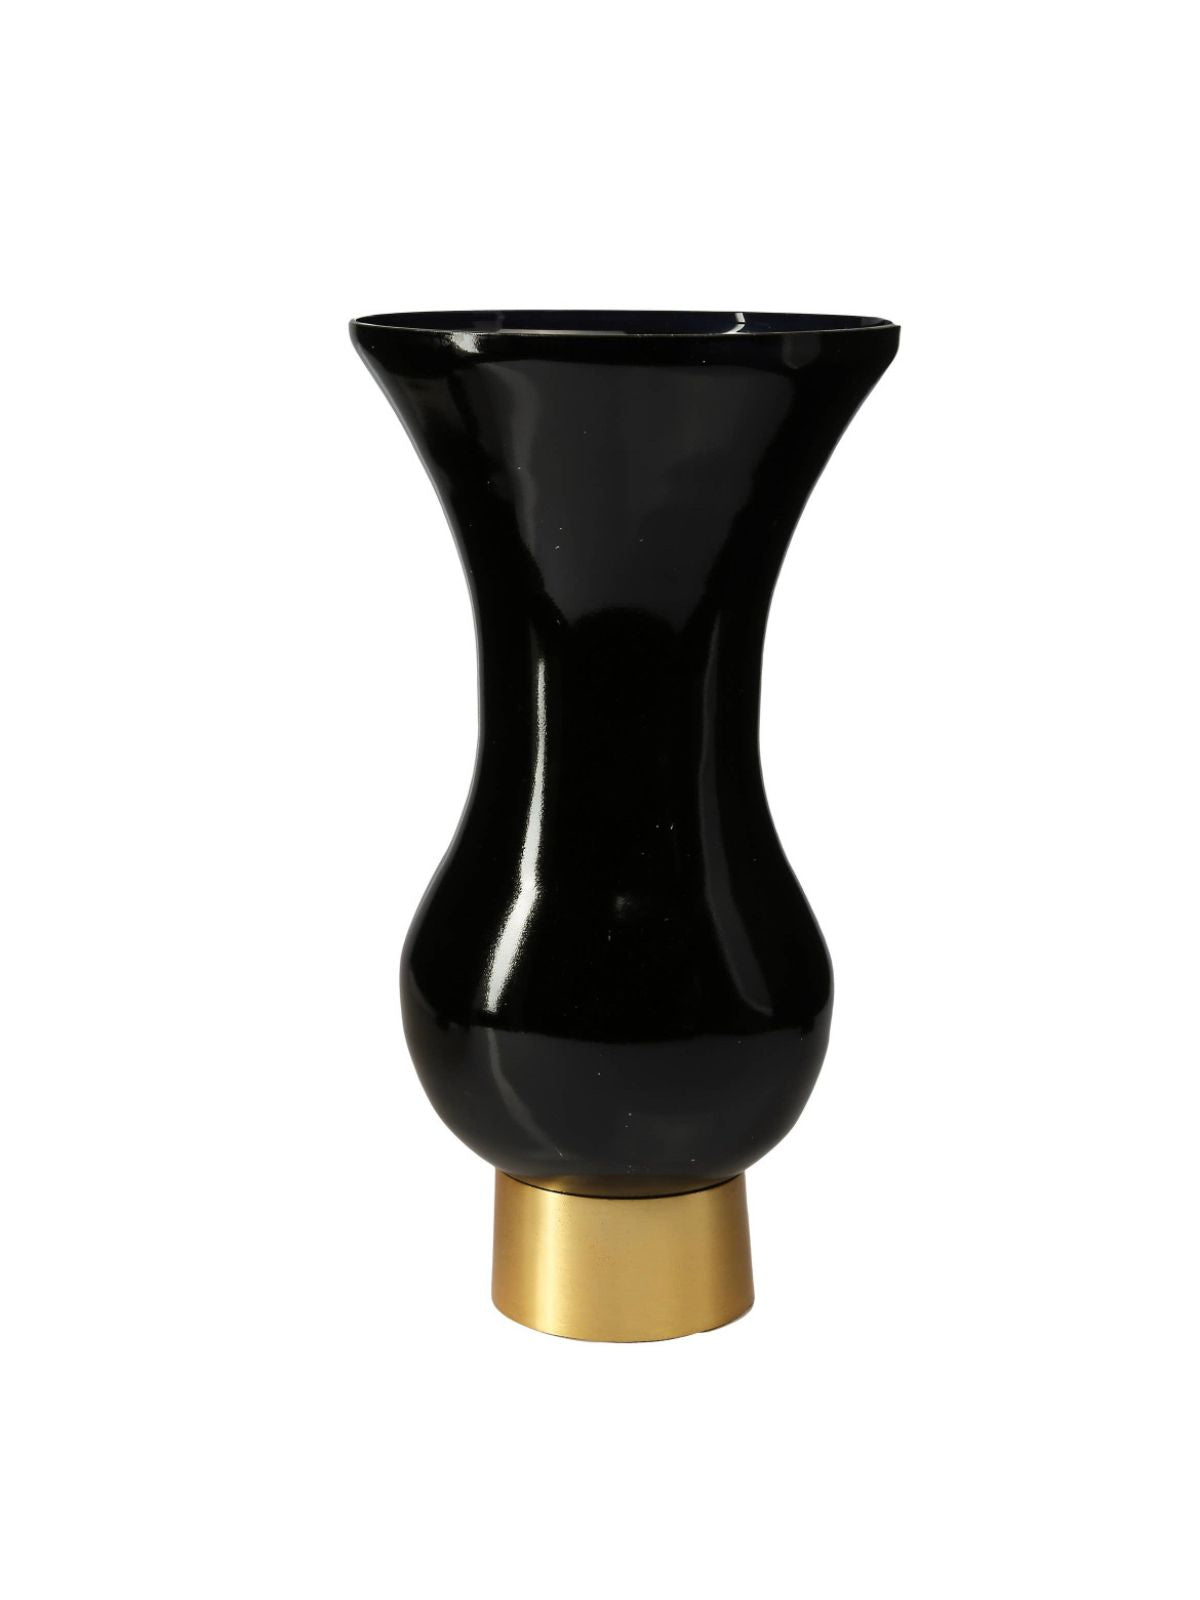 11.5H Luxurious Black Curvy Glass Decorative Vase with Gold Base - KYA Home Decor